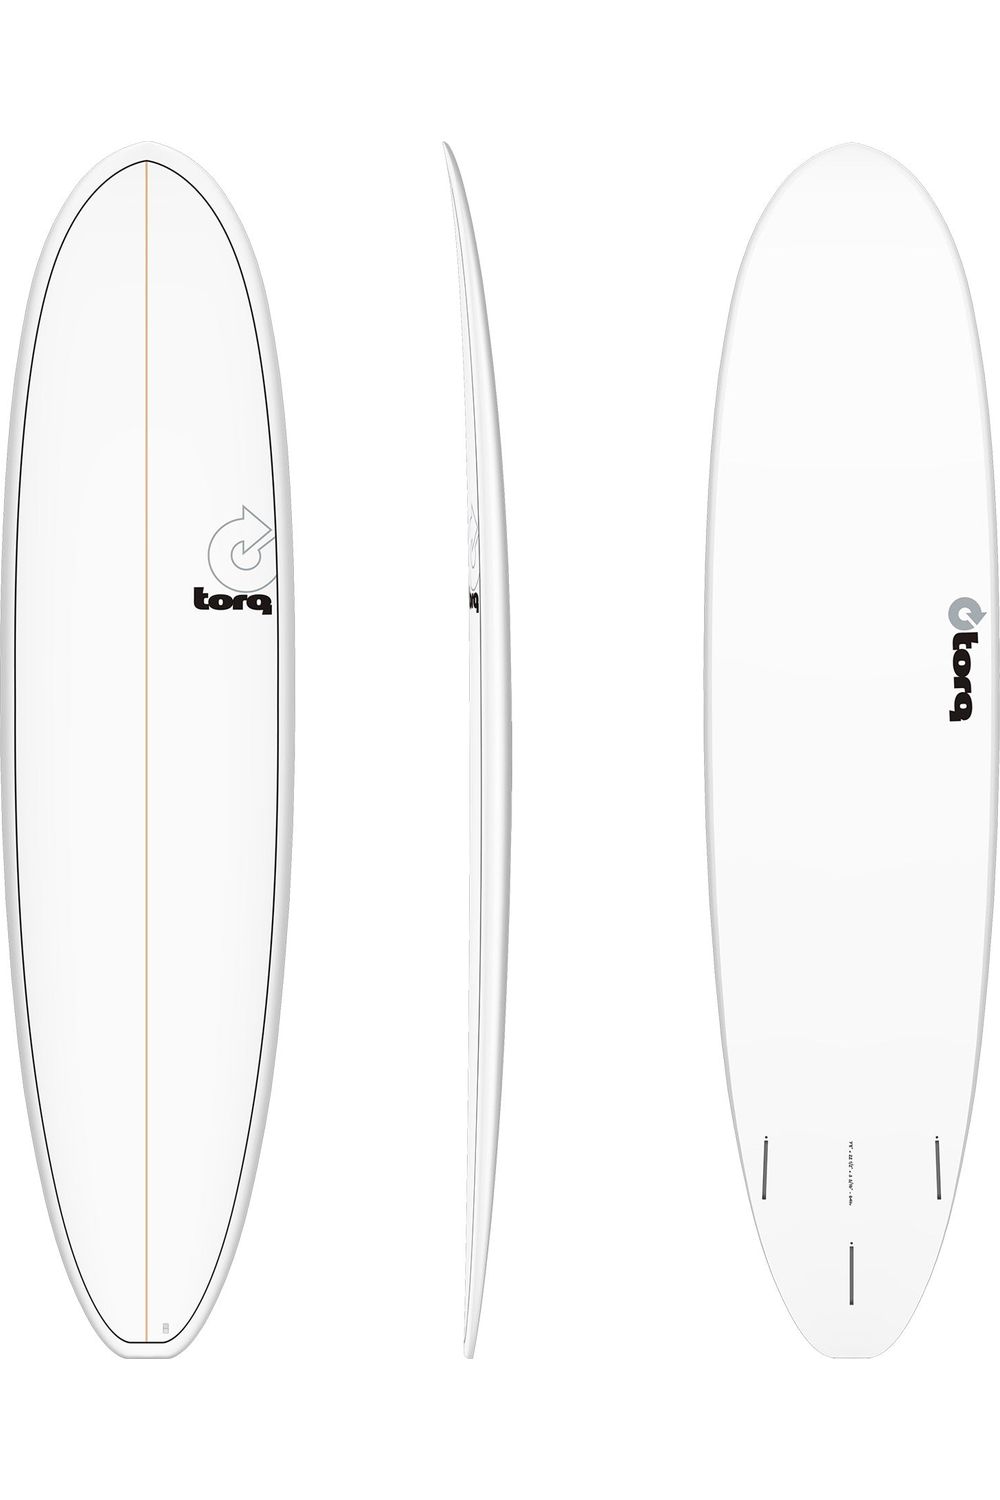 Torq TET Mod Fun V+ Surfboard in Pinline White